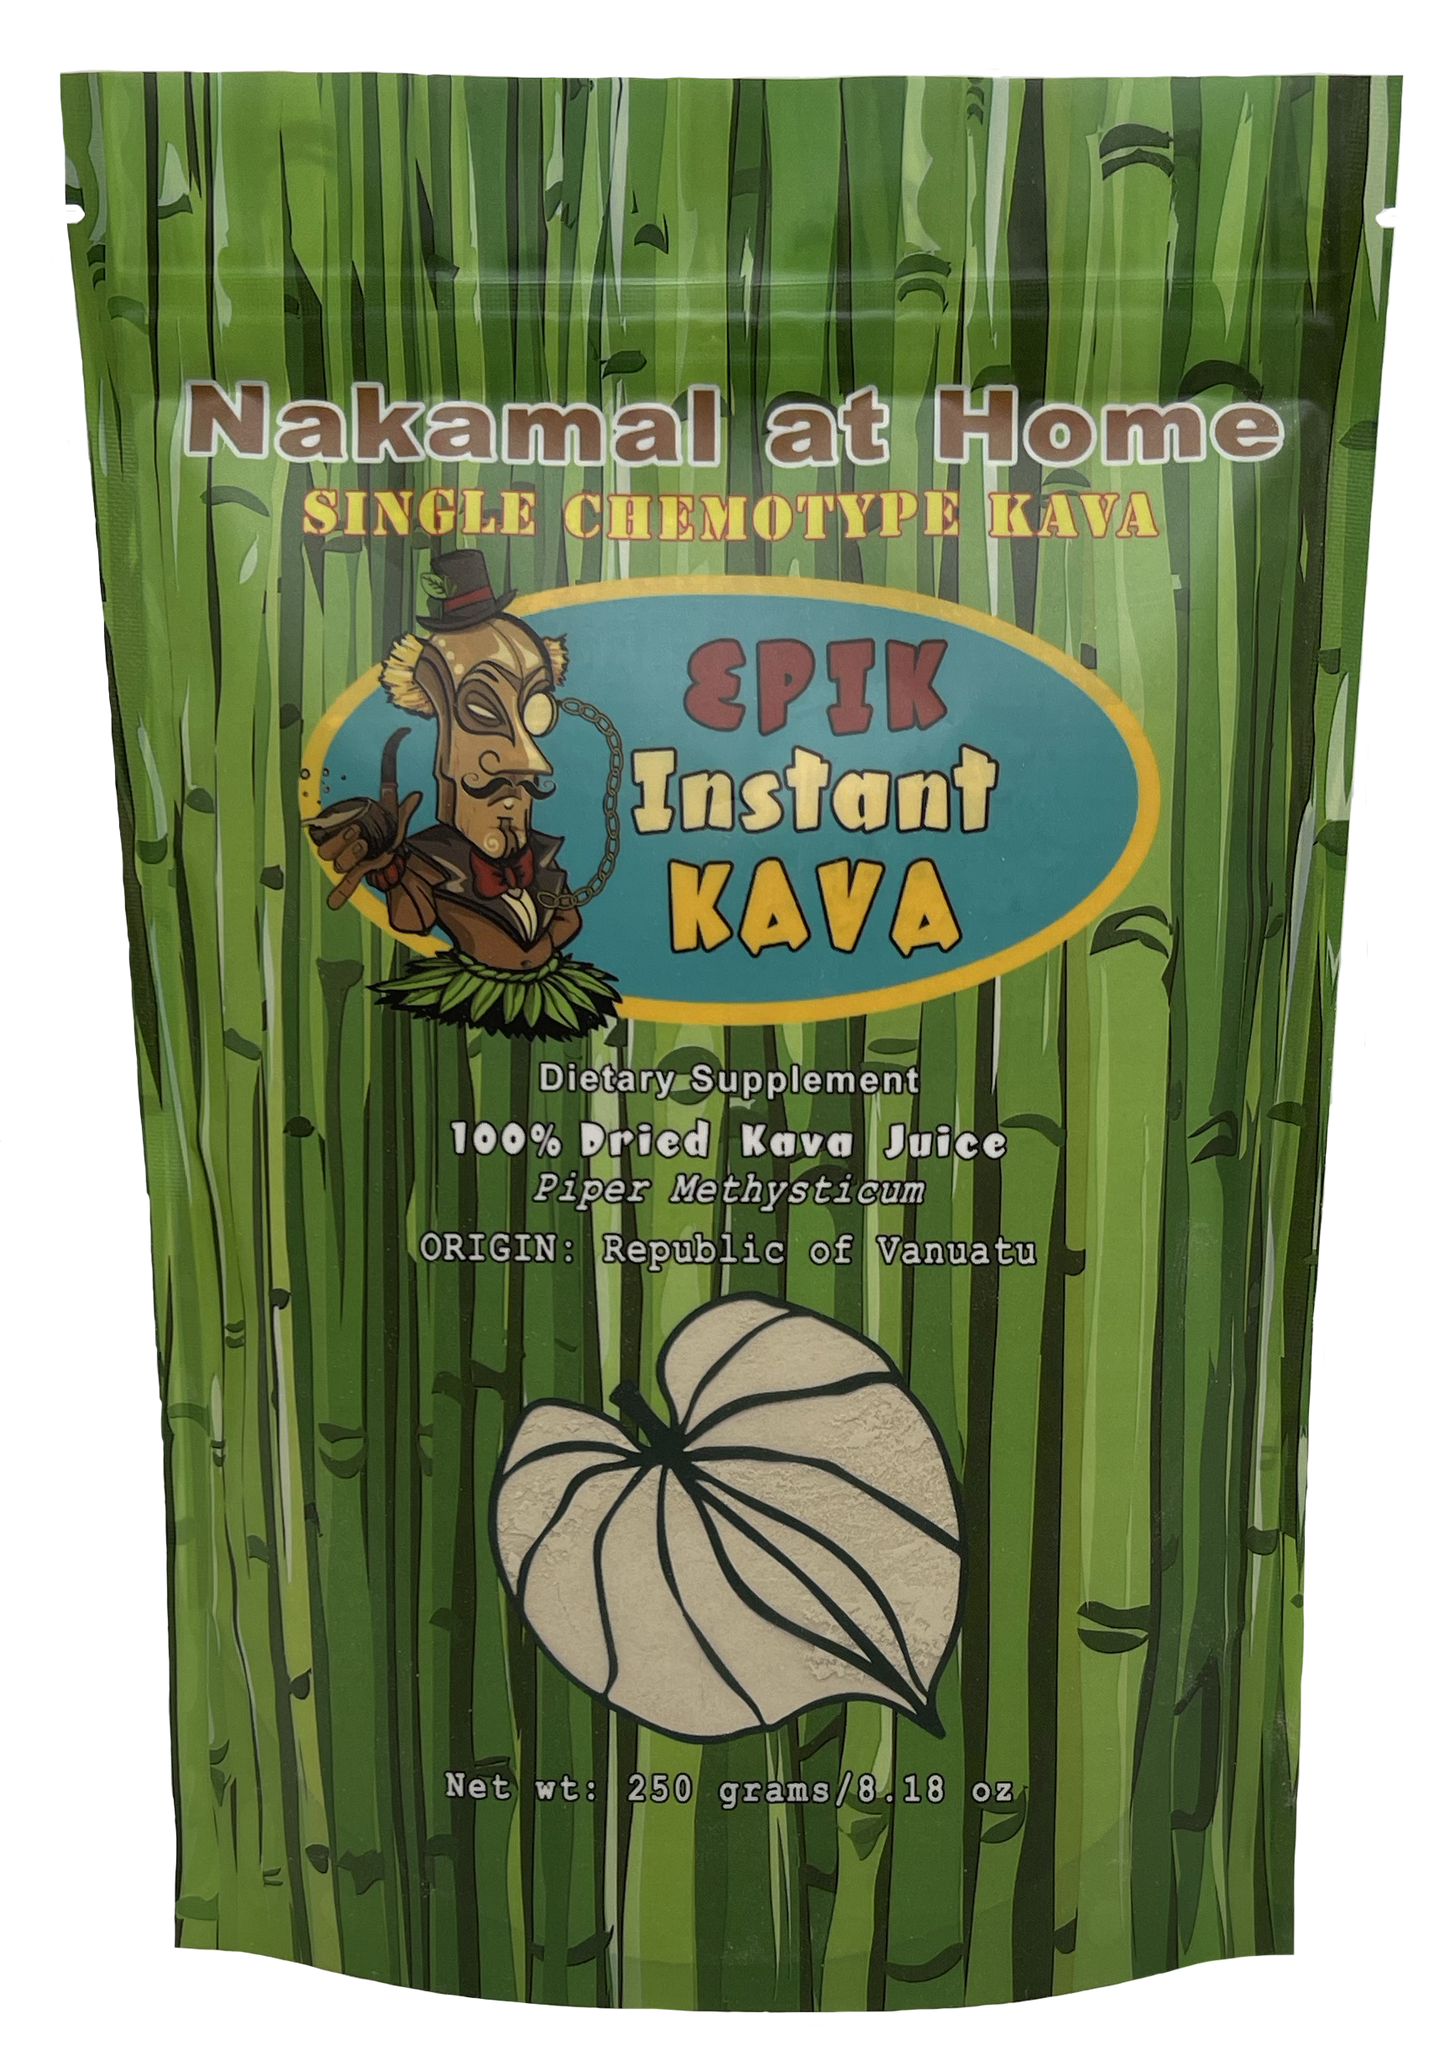 Epik Instant Kava Silesse 250 grams Nakamal At Home